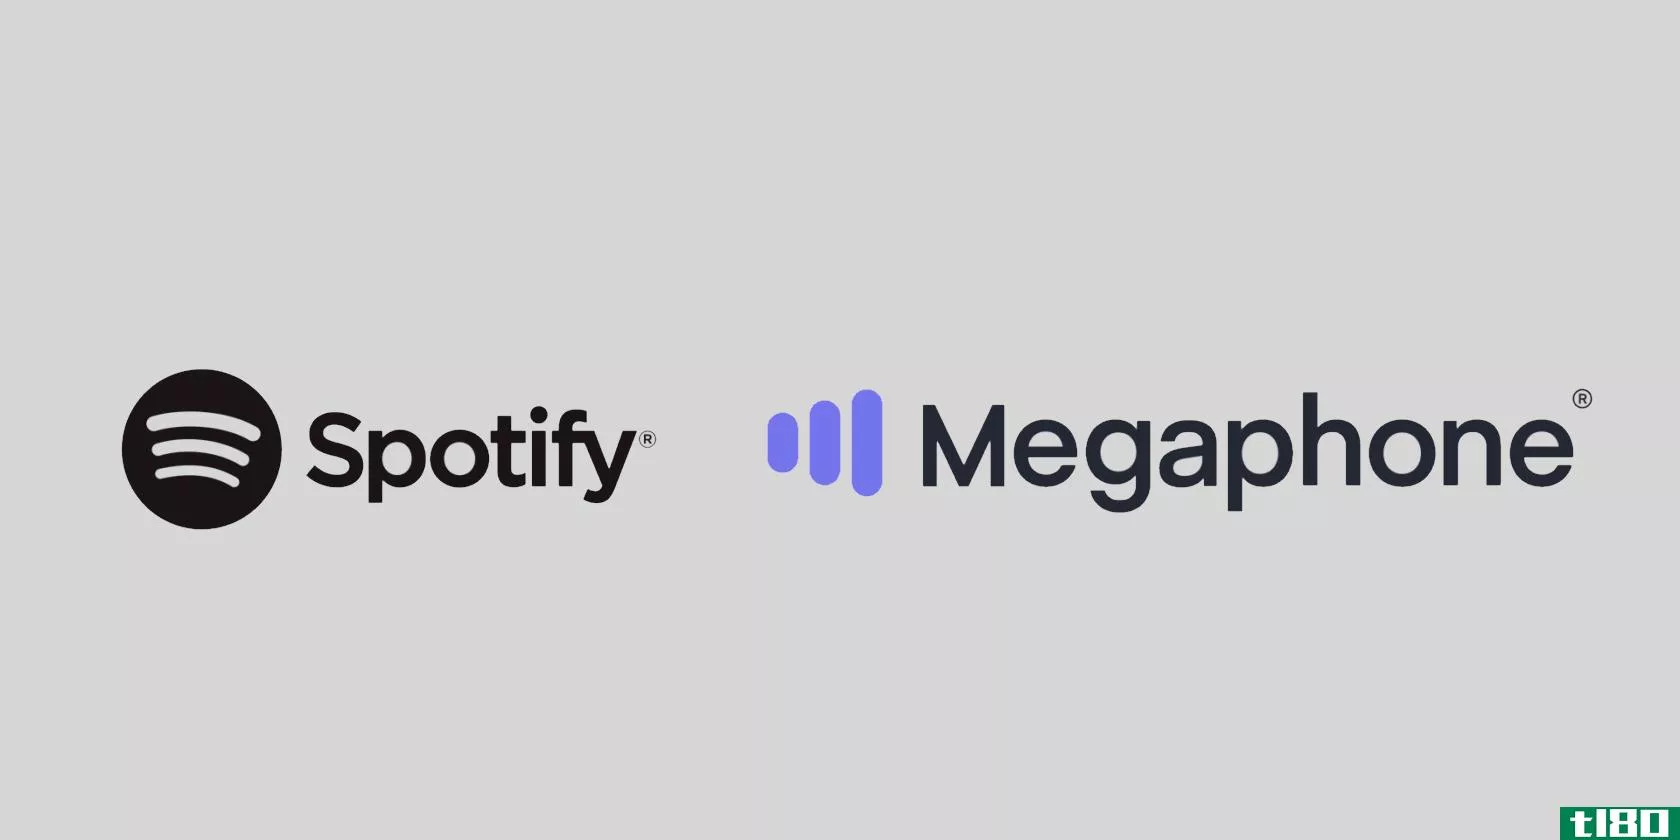 spotify megaphone